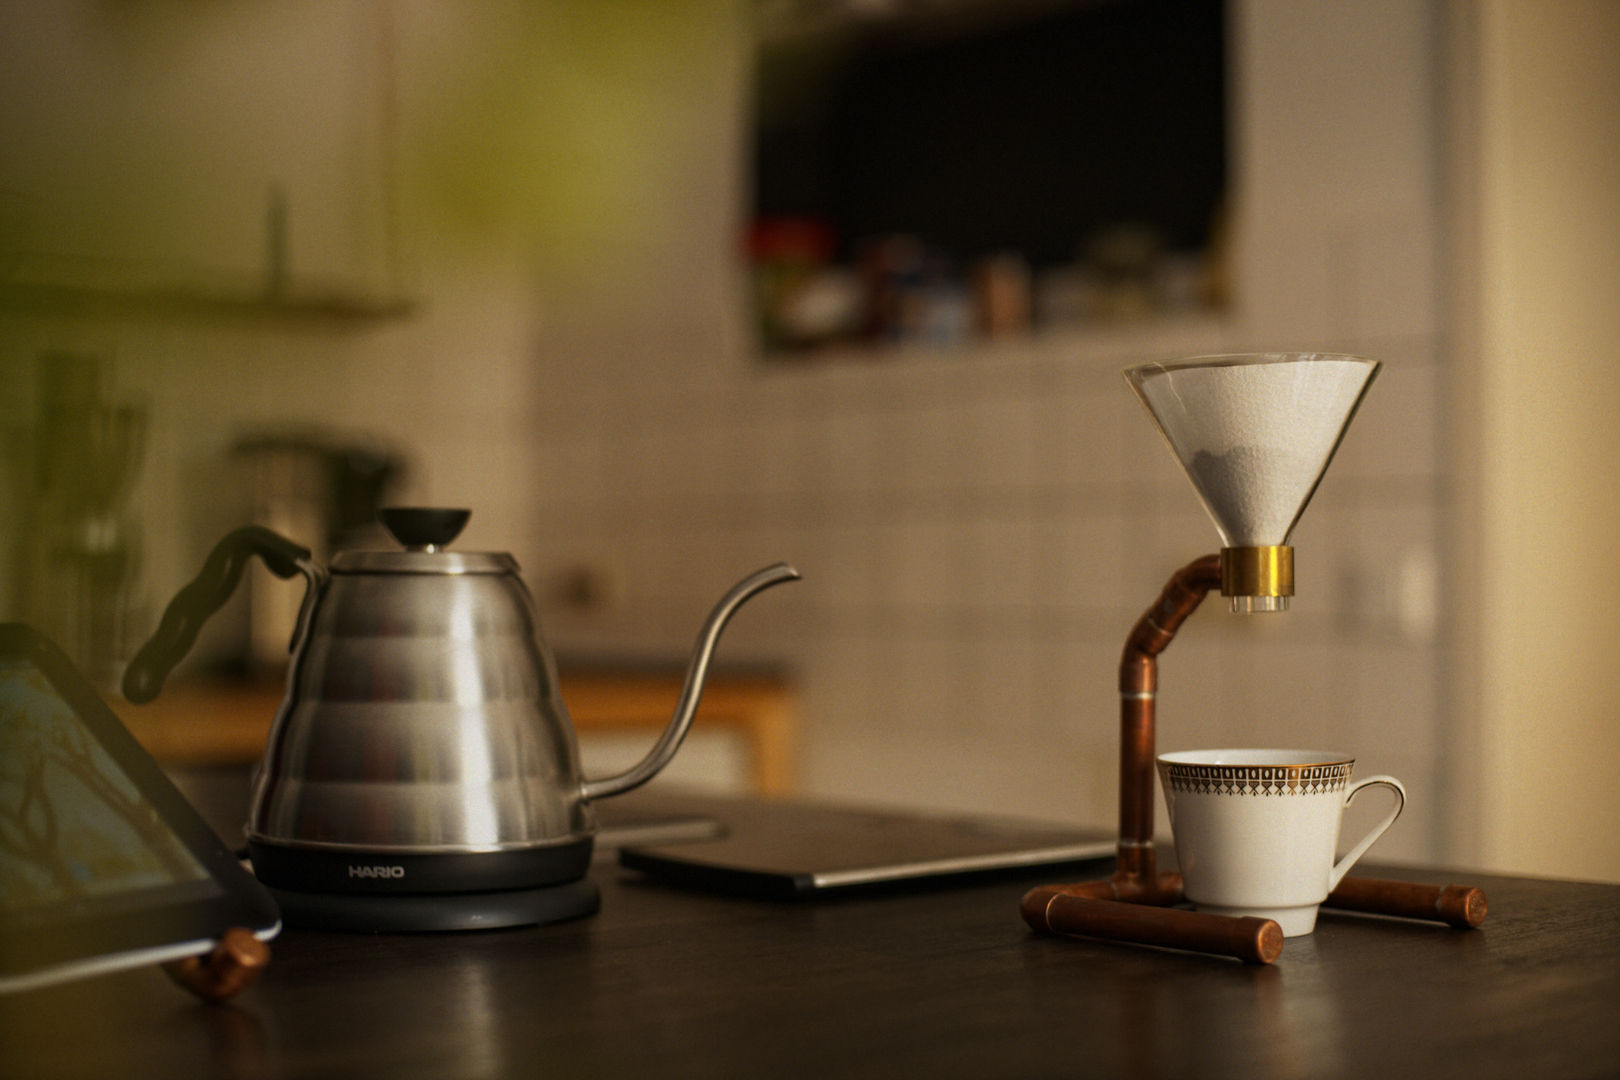 COPPER COFFEE - Dripper - Pour Over Coffee Stand, Drip Coffee Stand, COPPER COFFEE COPPER COFFEE Cocinas de estilo industrial Cobre/Bronce/Latón Utensilios de cocina